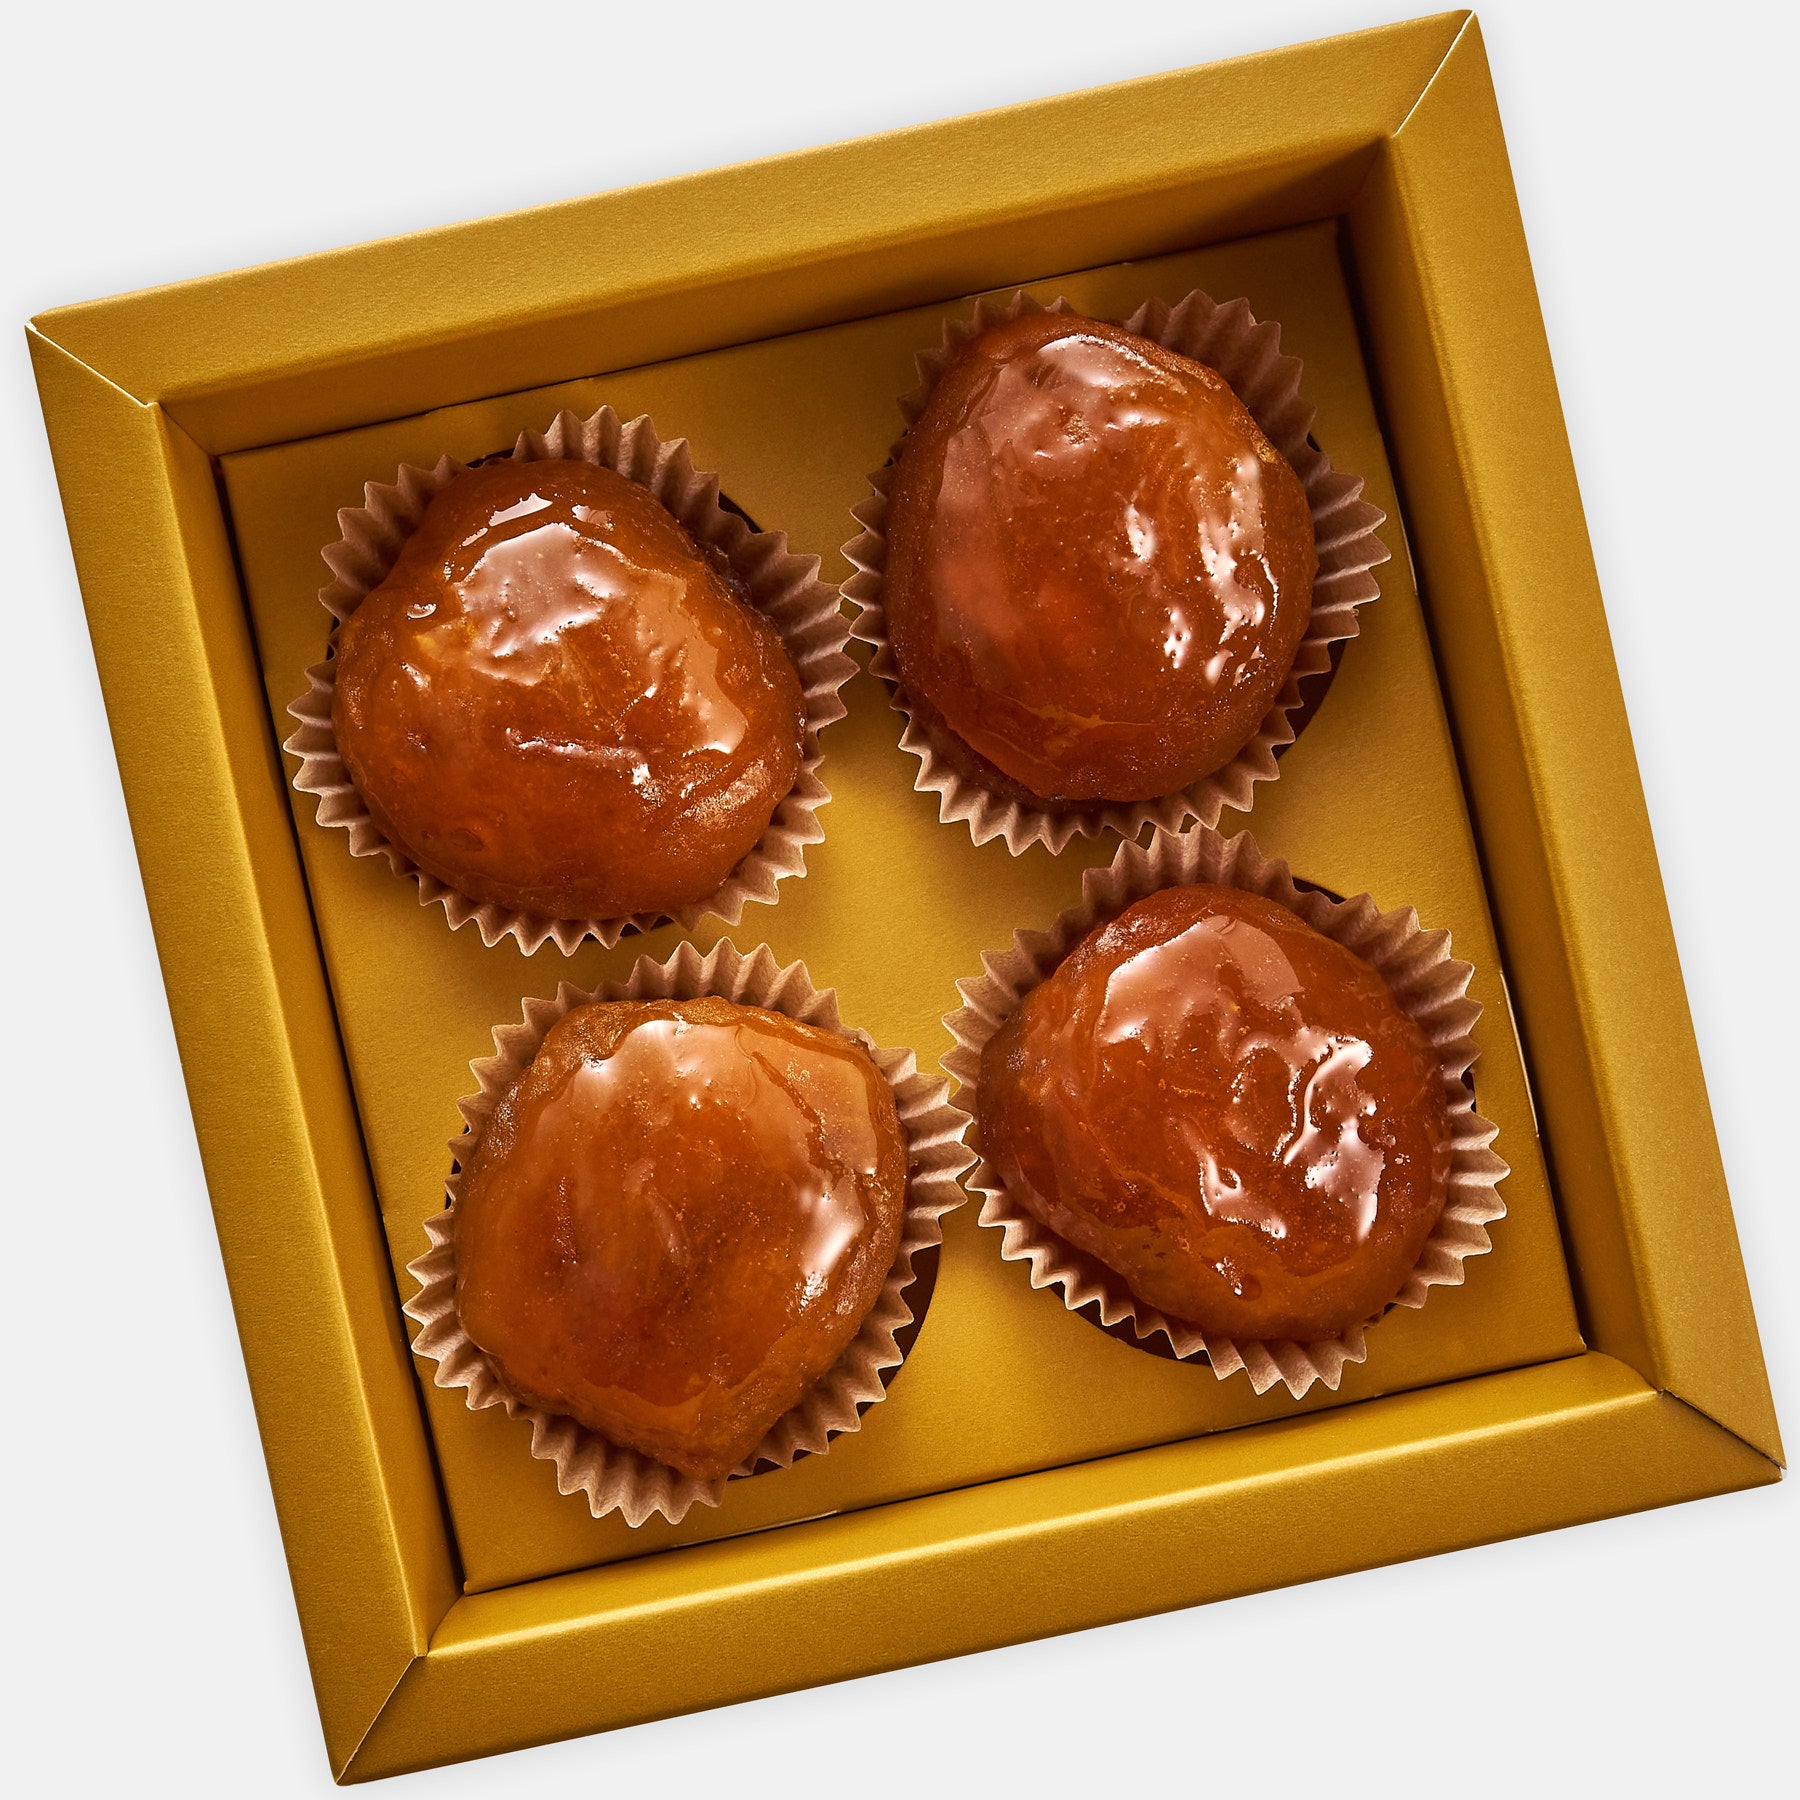 Glazed, crystallized apricots - ghraoui-chocolate